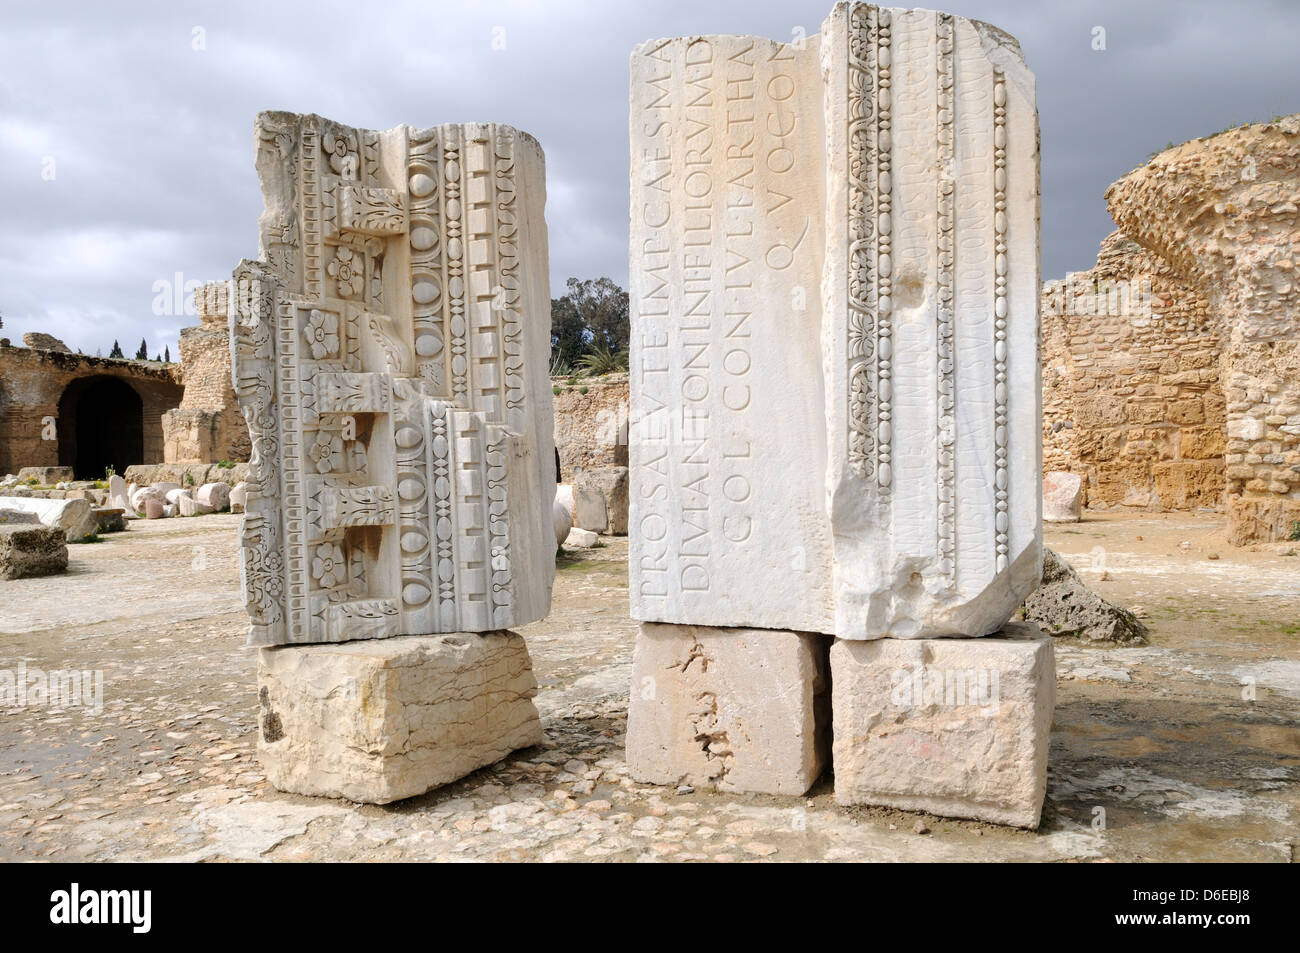 inscription and carving on a stone pillar Carthage Ancient city Tunisia Stock Photo